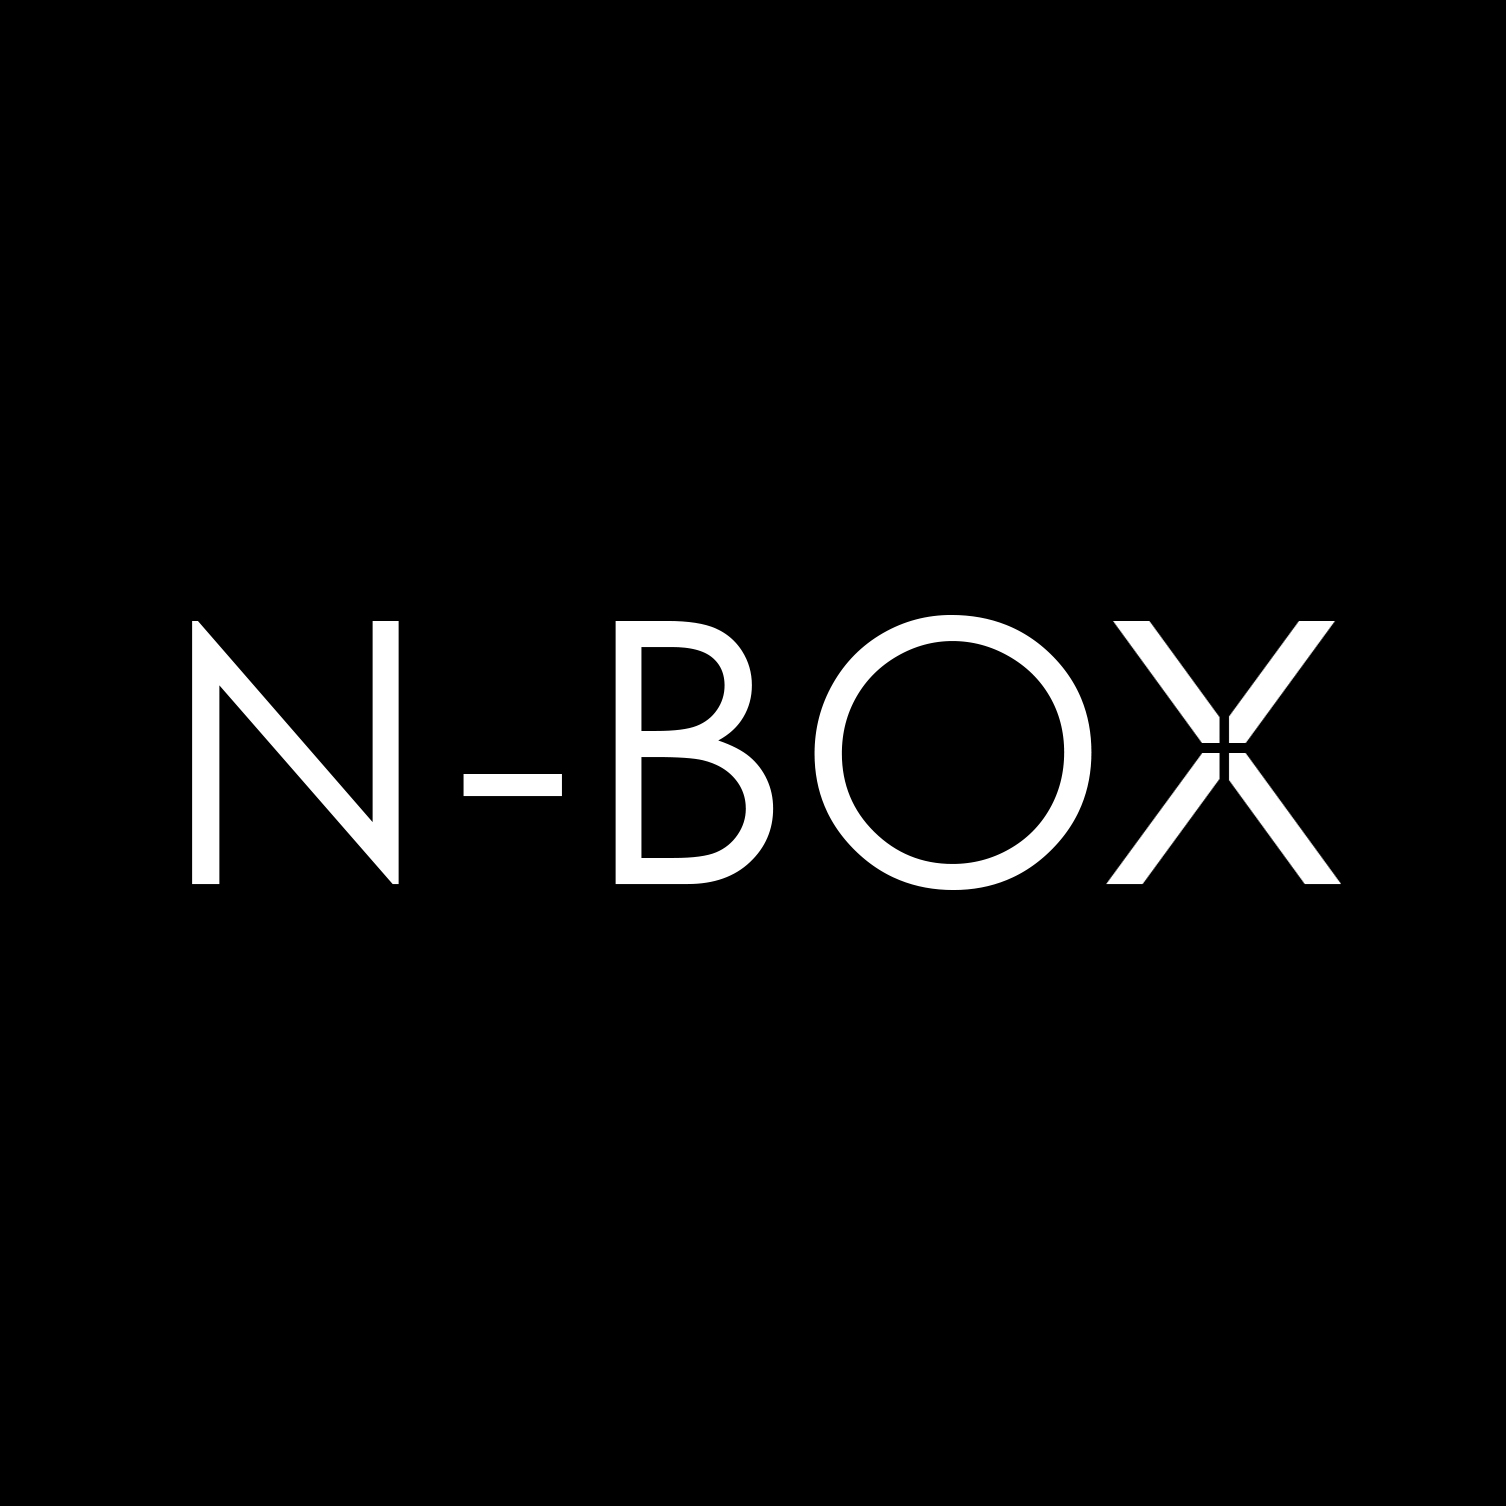 NBOX Visual